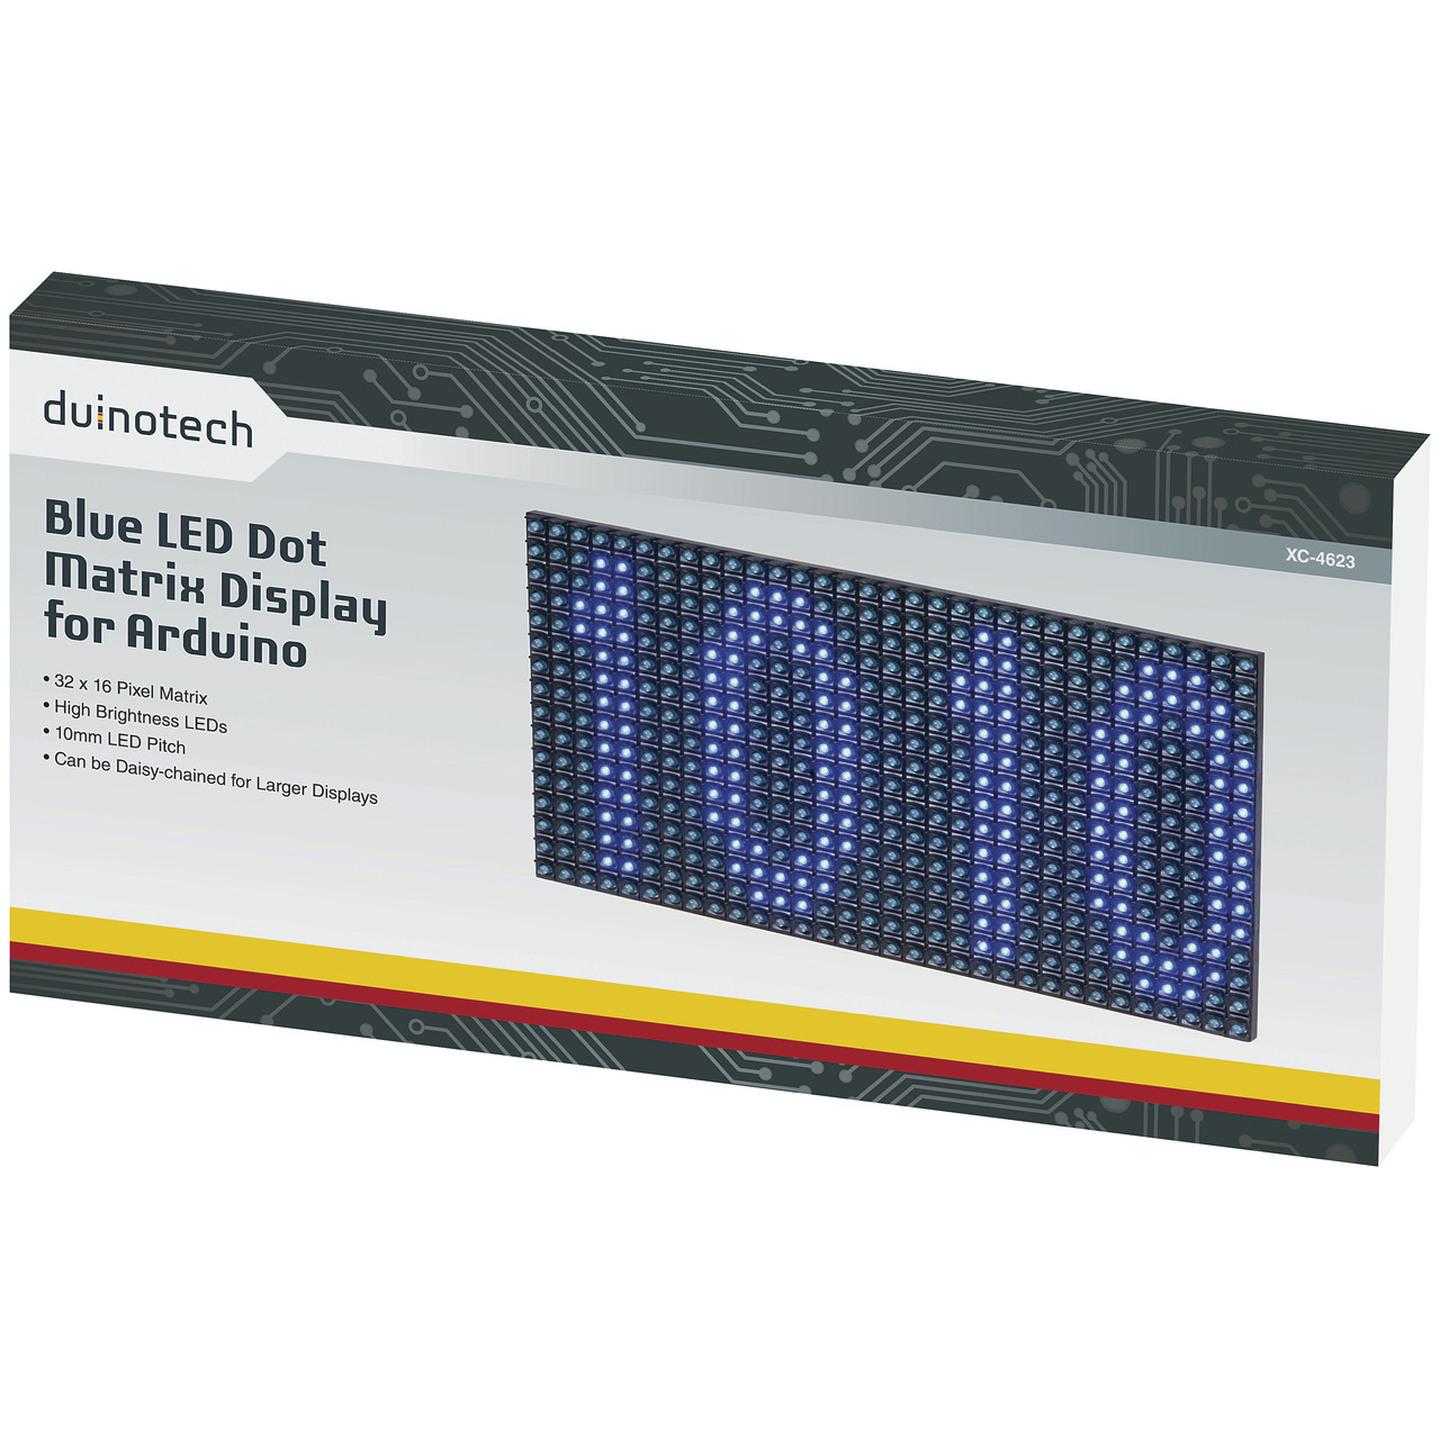 Blue LED Dot Matrix Display for Arduino